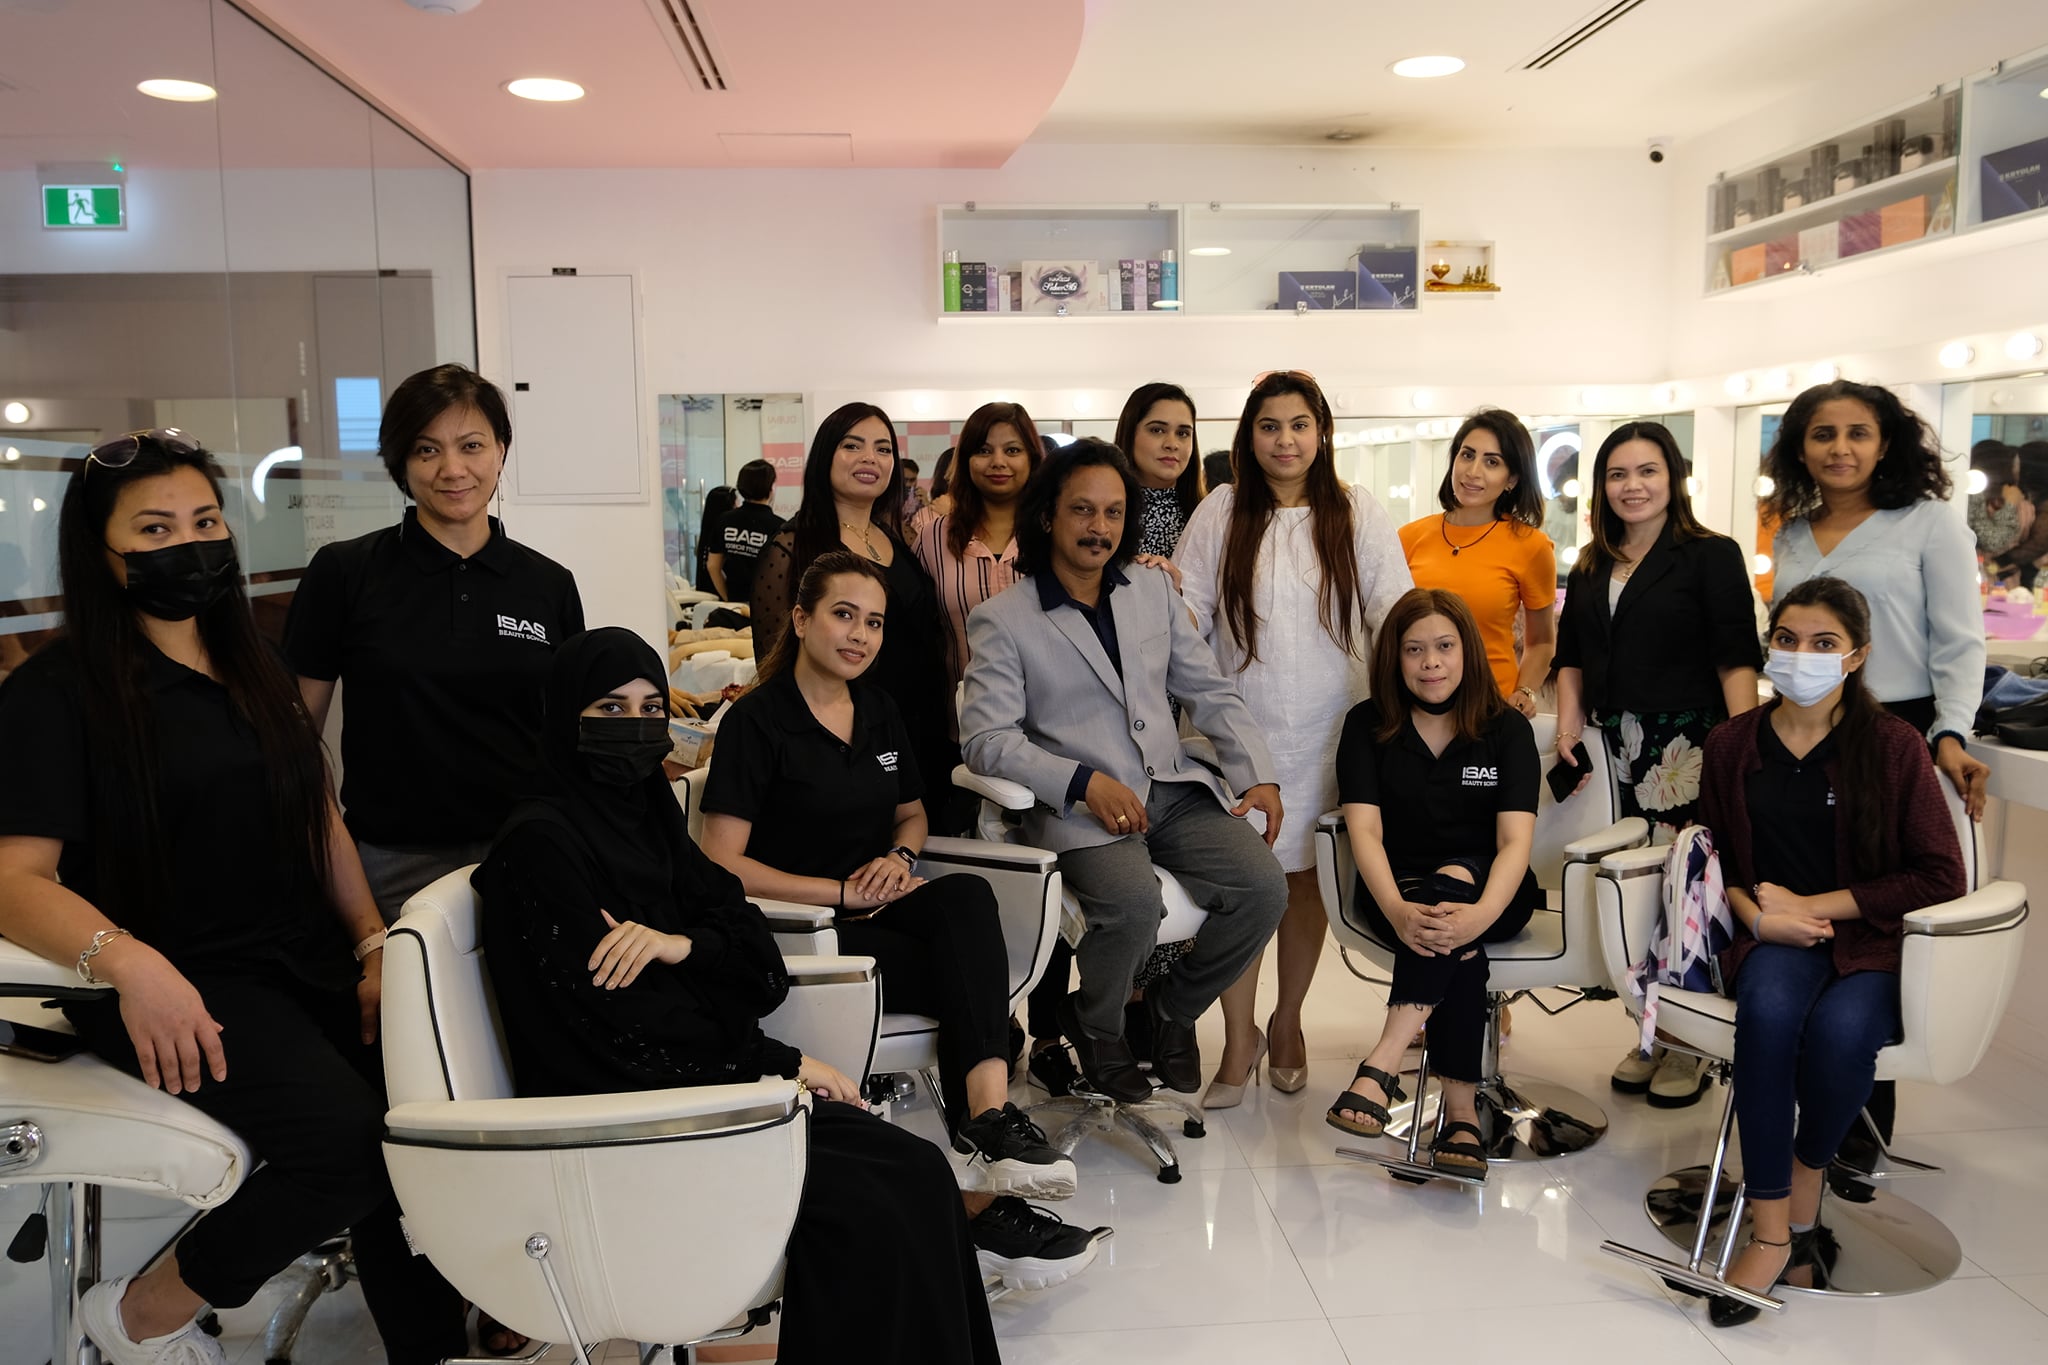 Prosthetic Makeup Workshop @ISAS Dubai Center